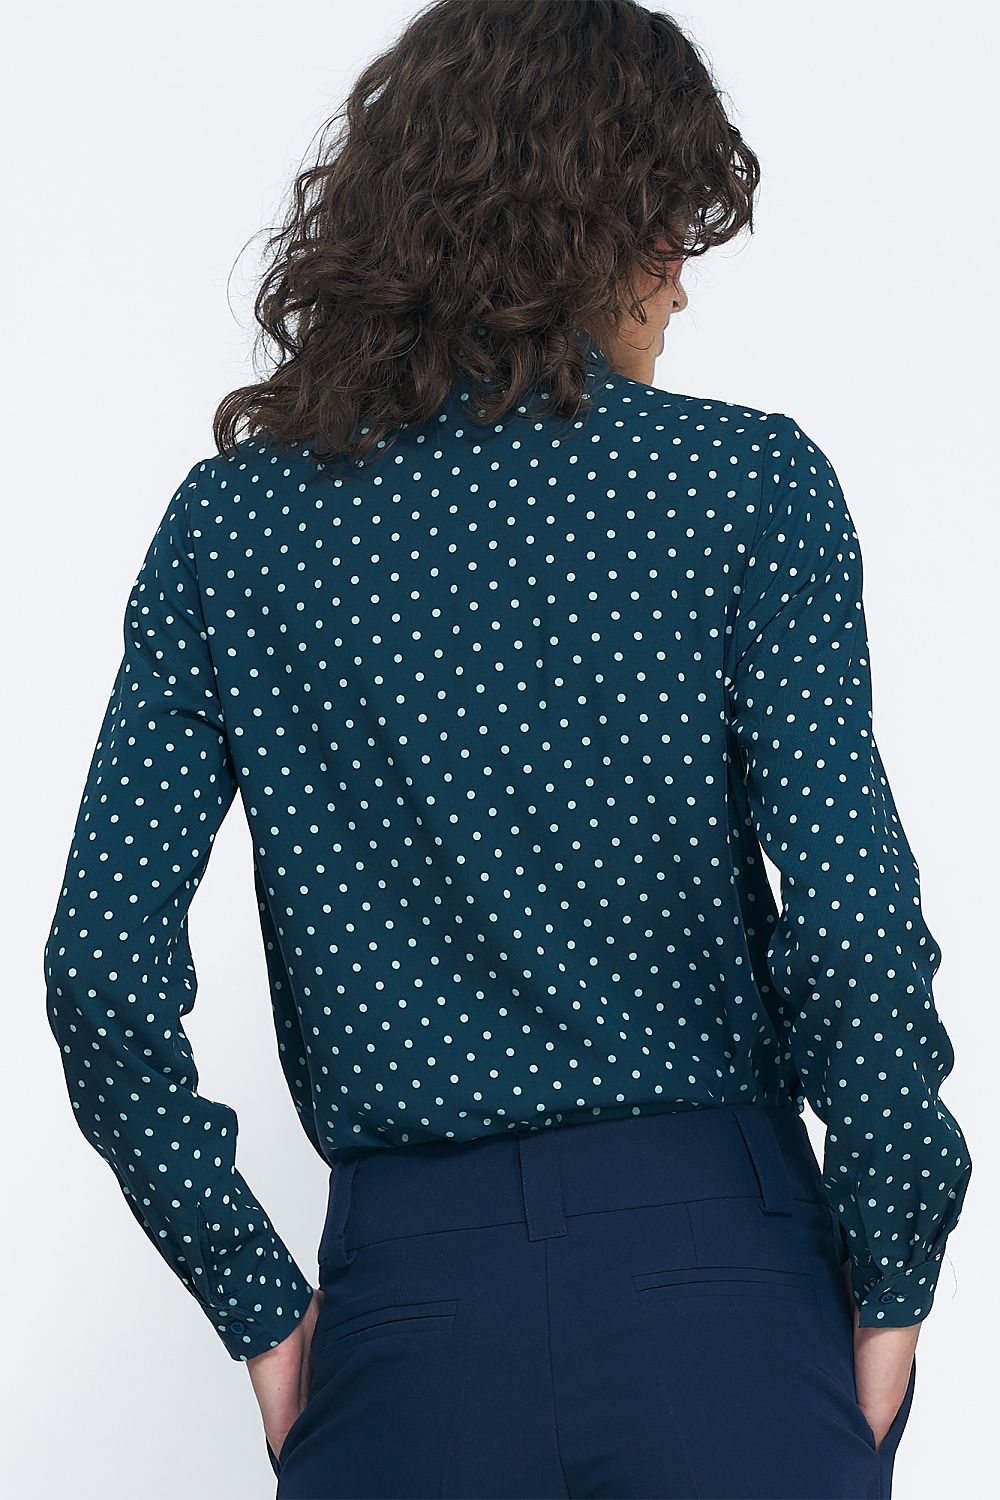 TEEK - Green Polka Dot Collared Buttoned Long Sleeve Shirt TOPS TEEK MH   